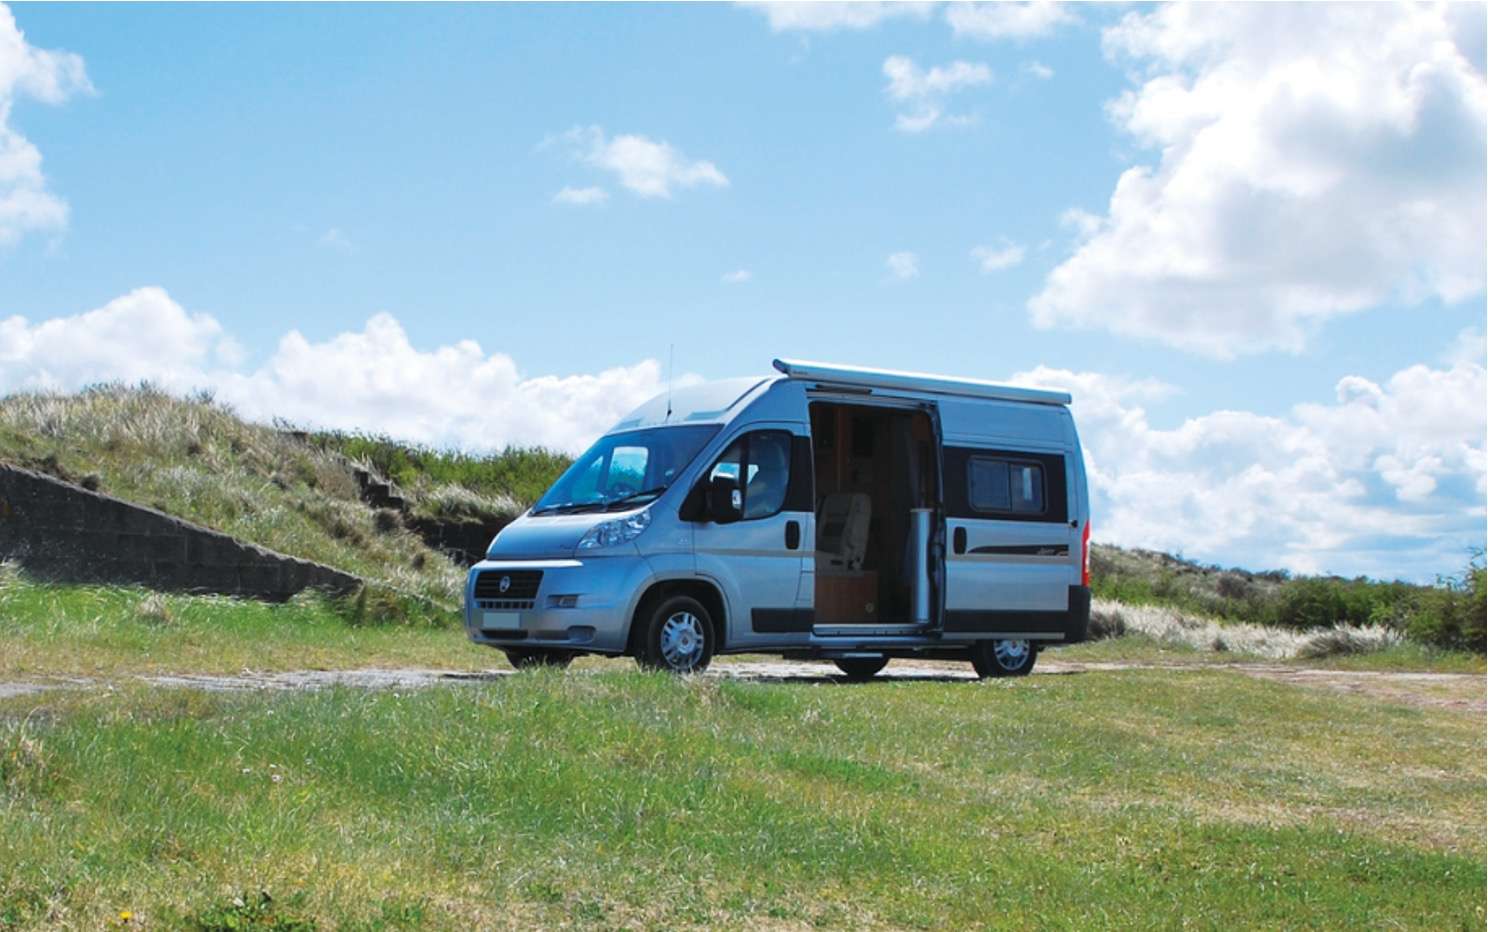 An open campervan